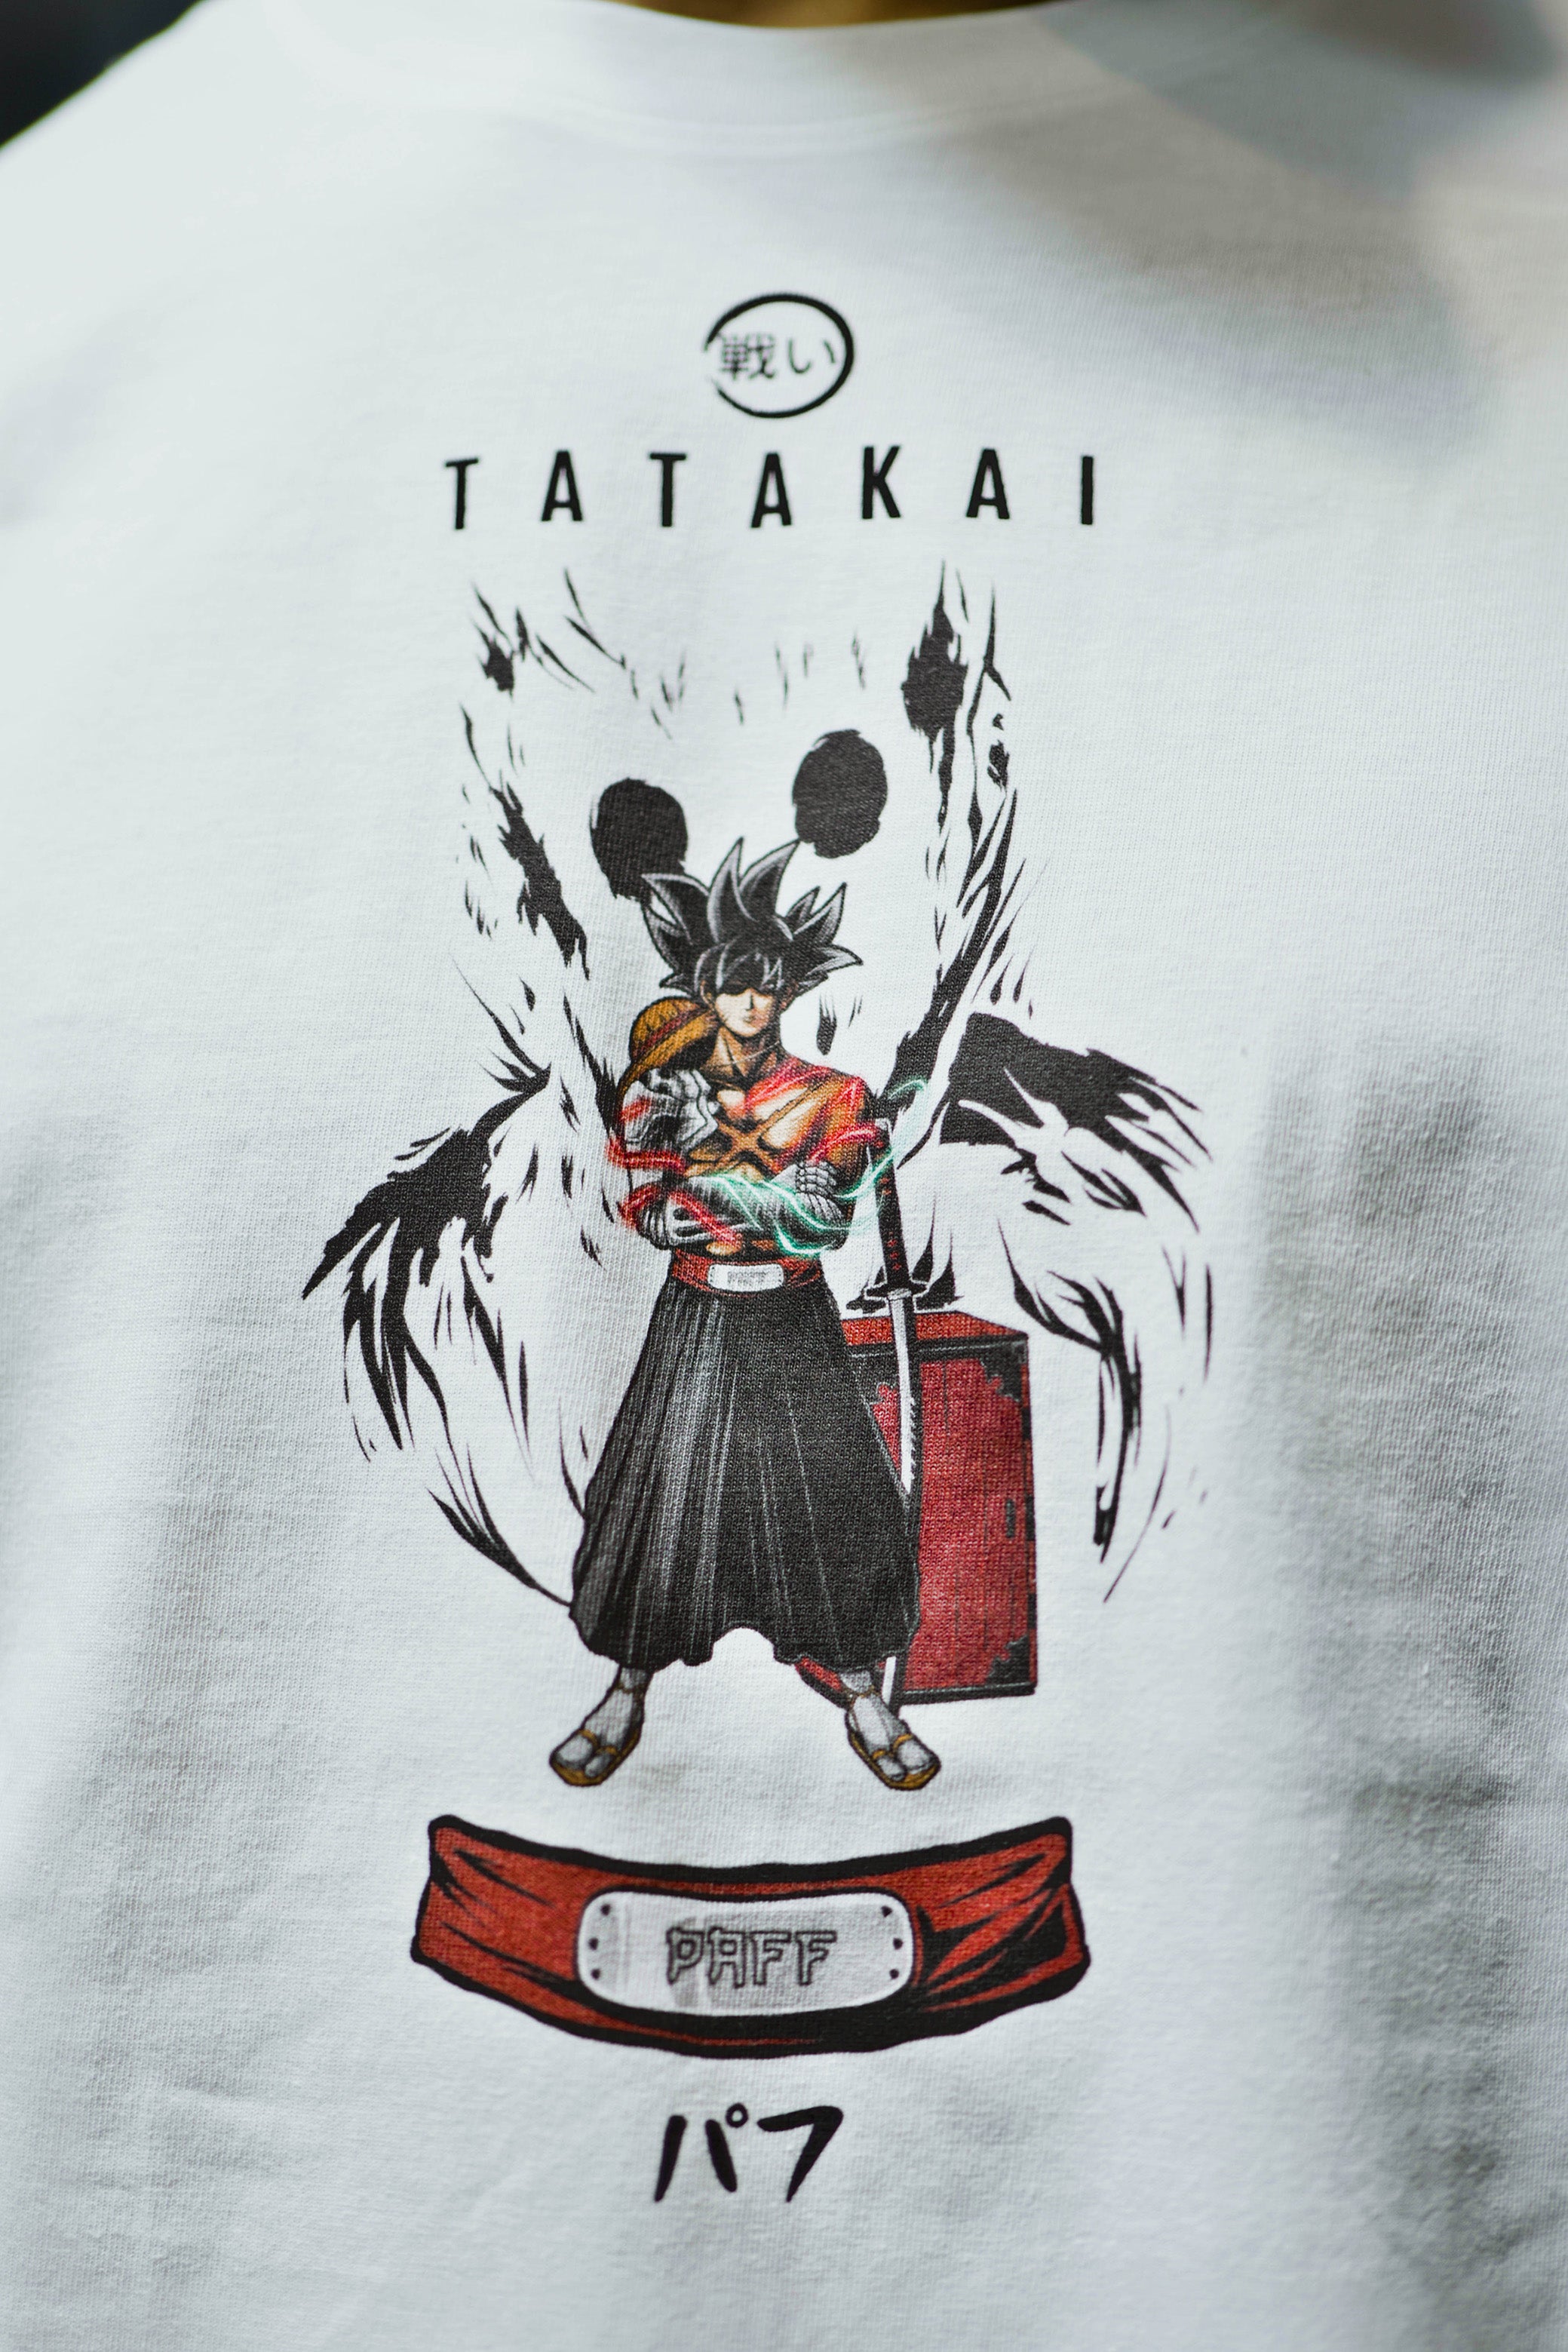 TATAKAI x Paff t-shirt